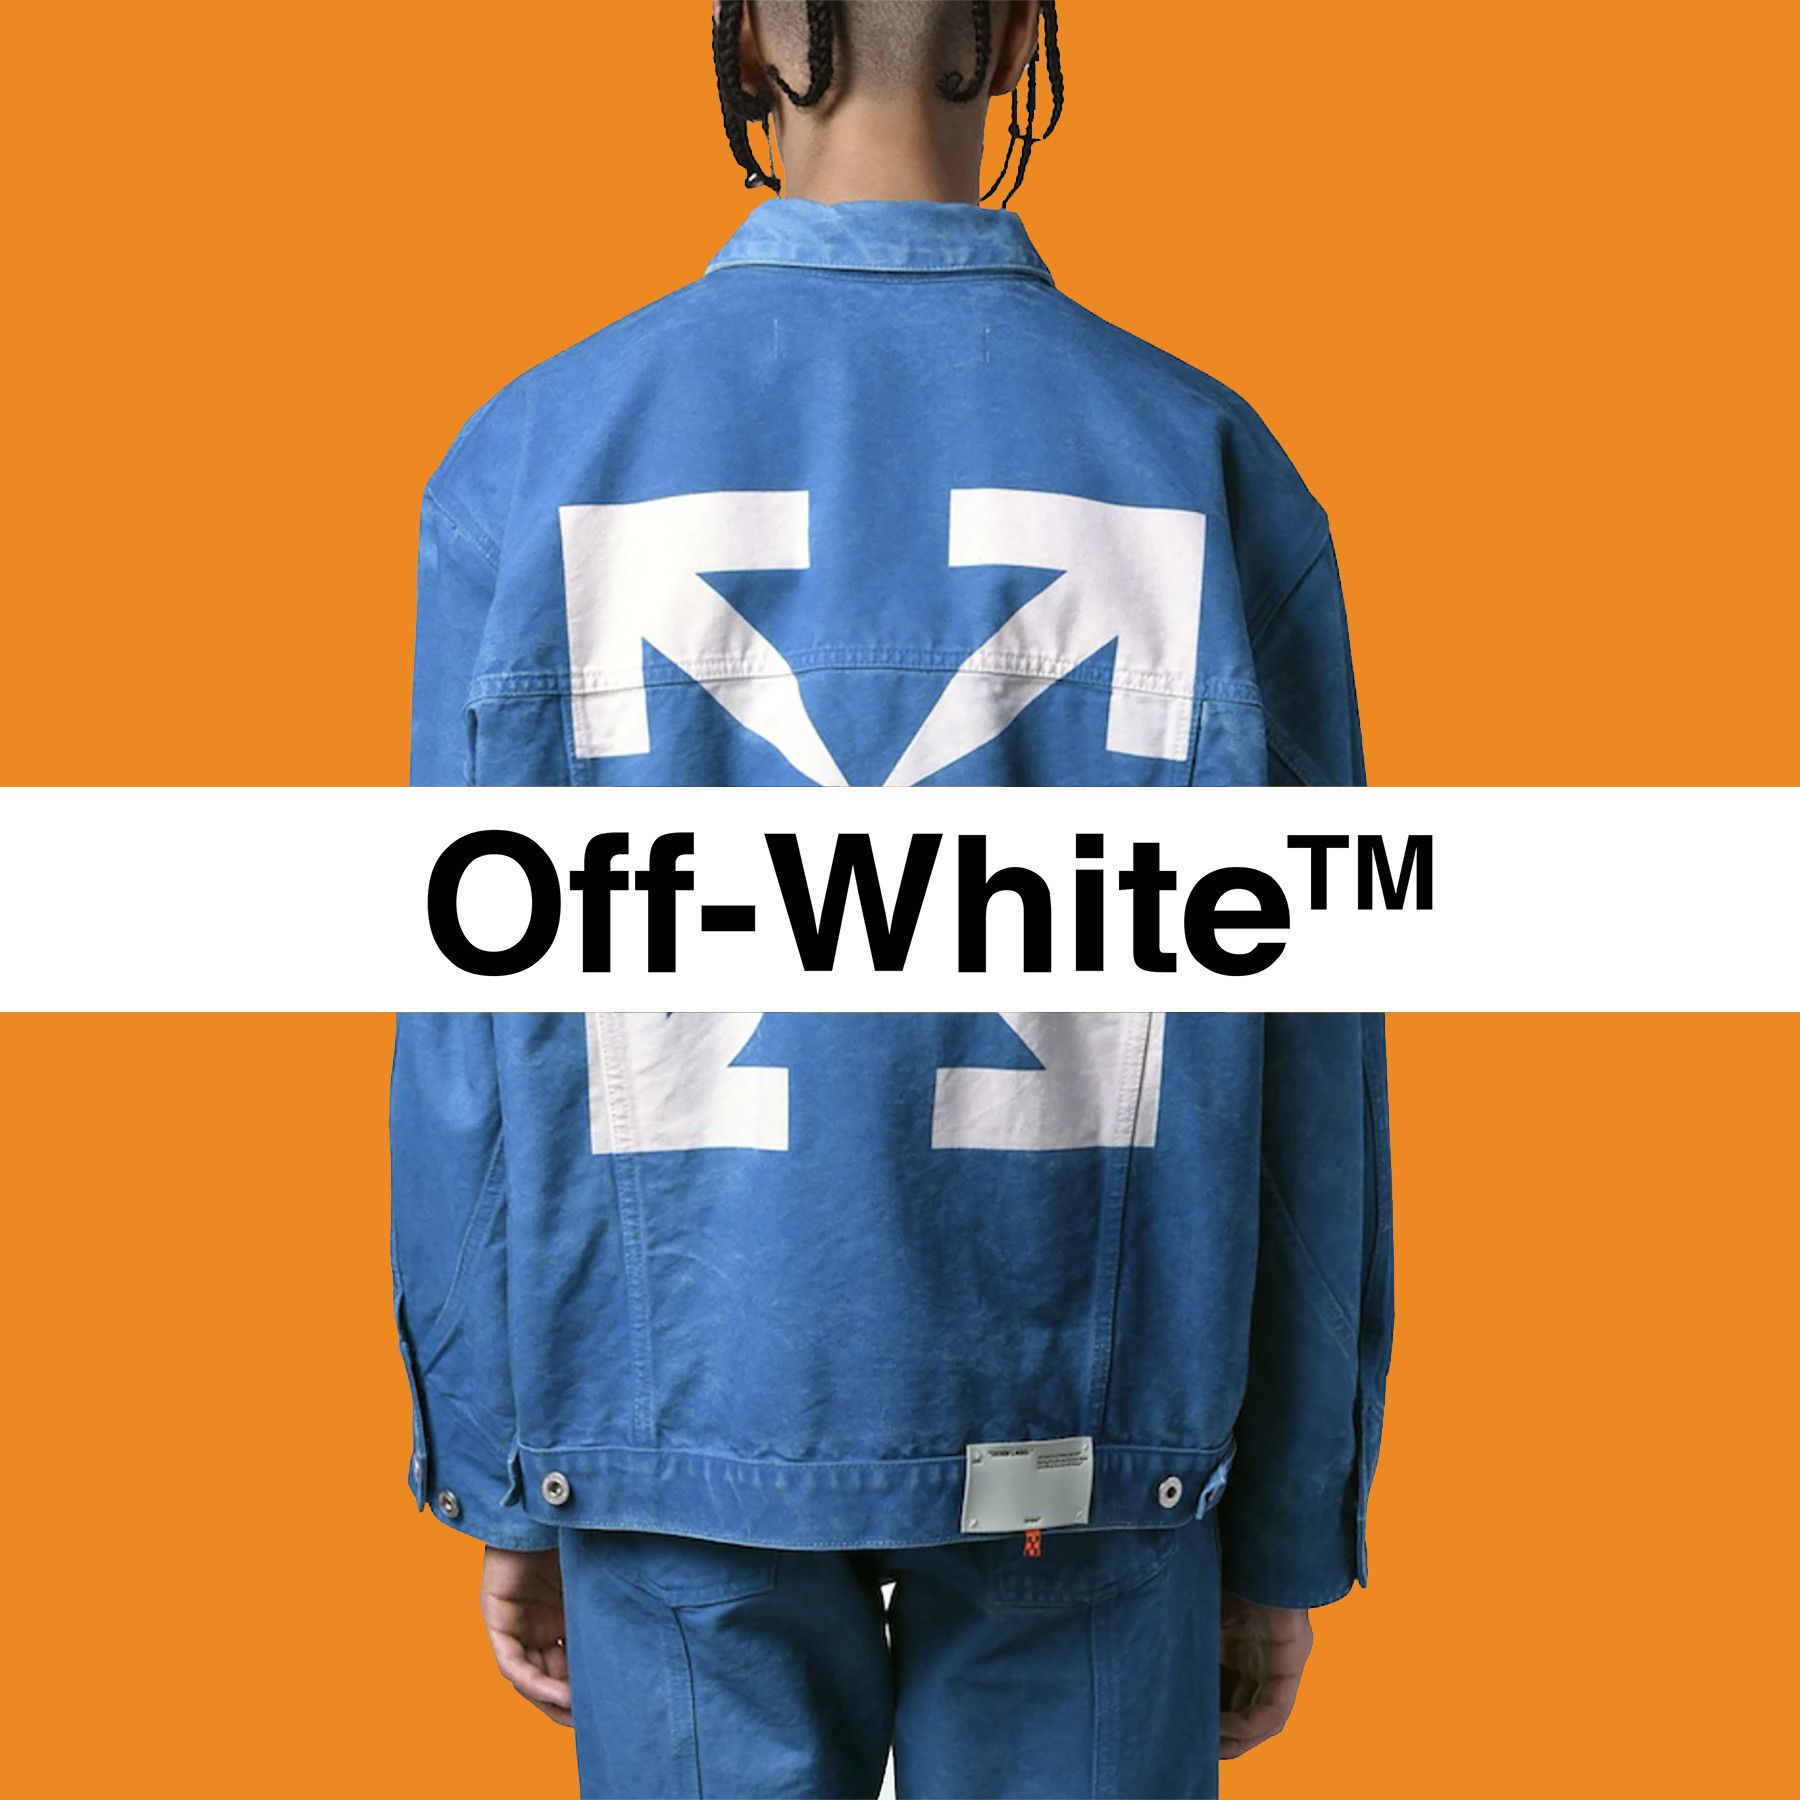 Off-White c/o Virgil Abloh Gradient Arrows Denim Jacket in Blue for Men